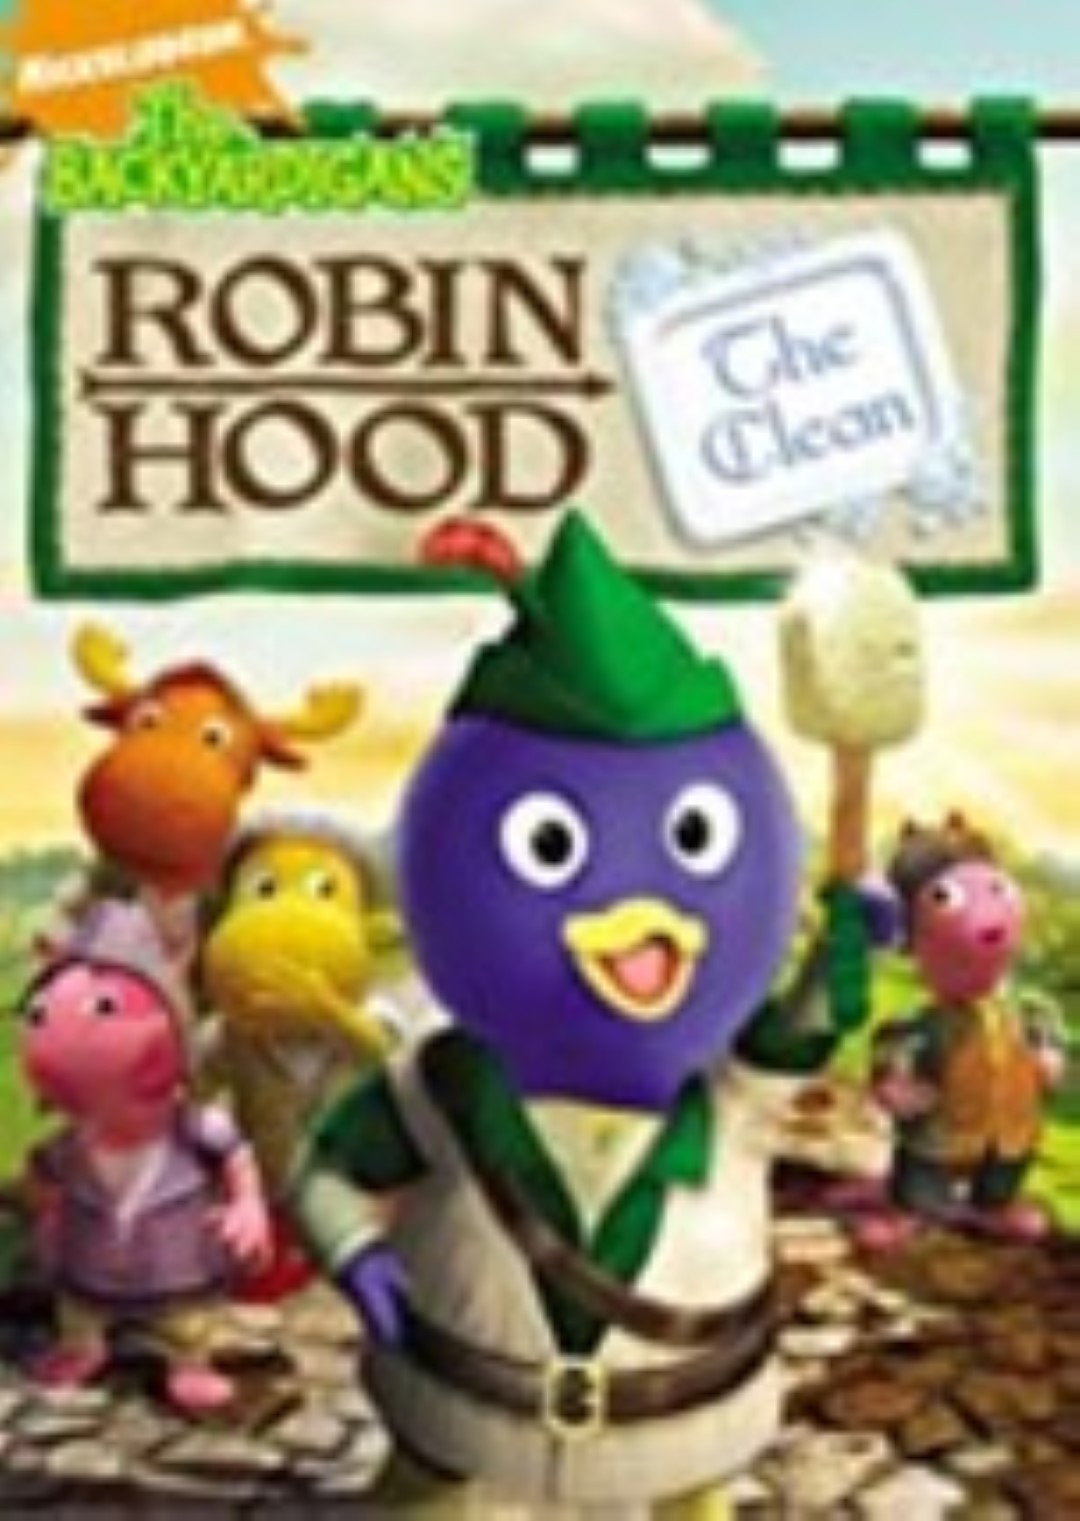 The backyardigans robin hood the clean dvd  large 